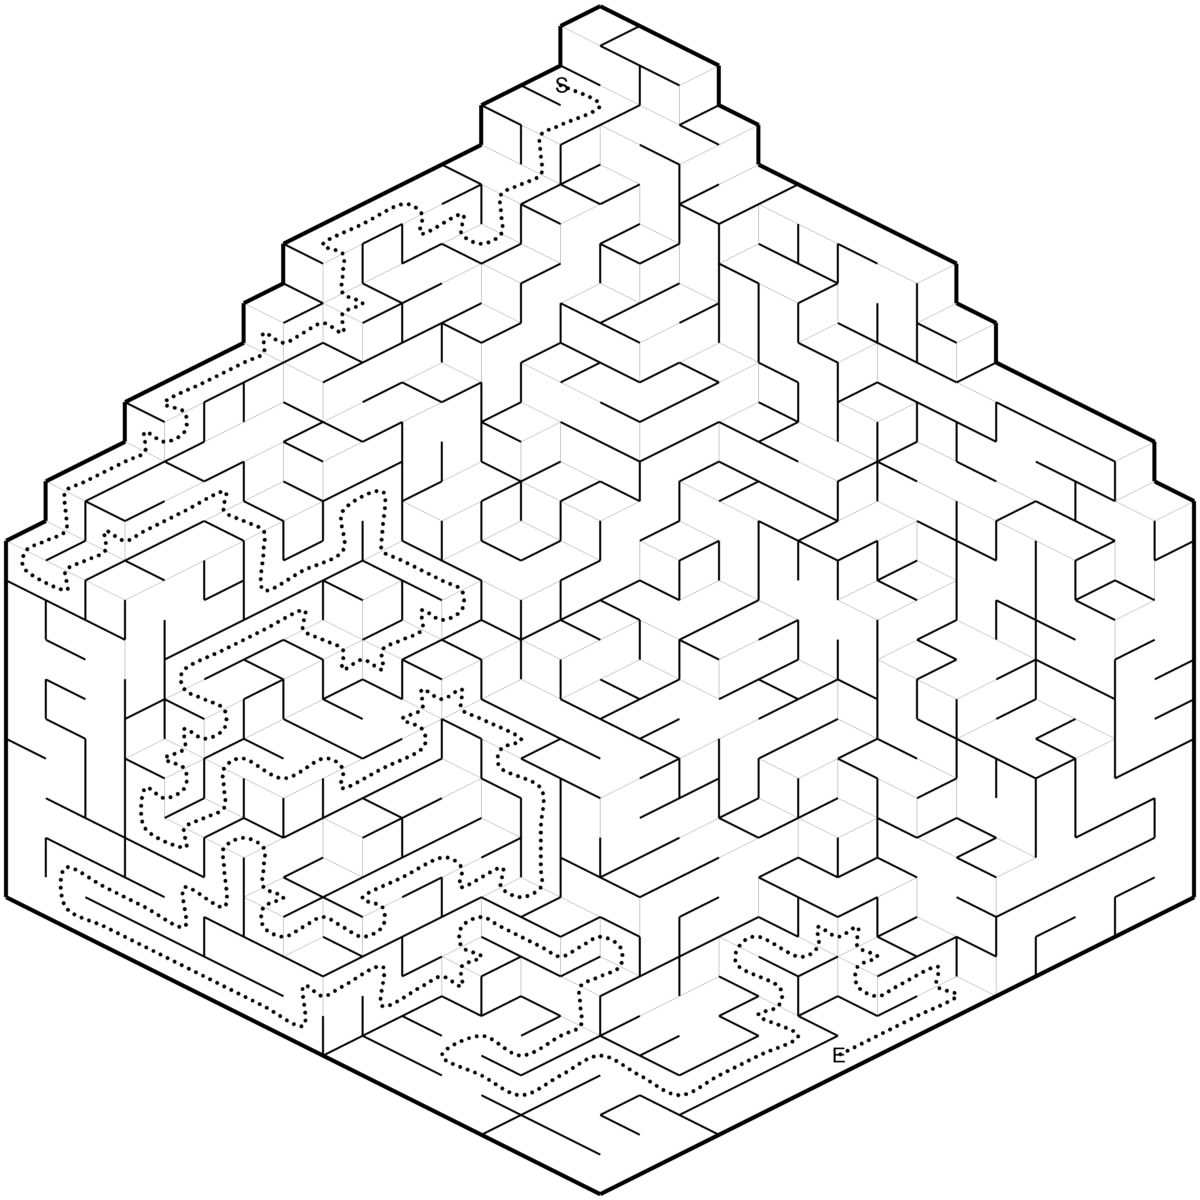 Random Maze with 100% path